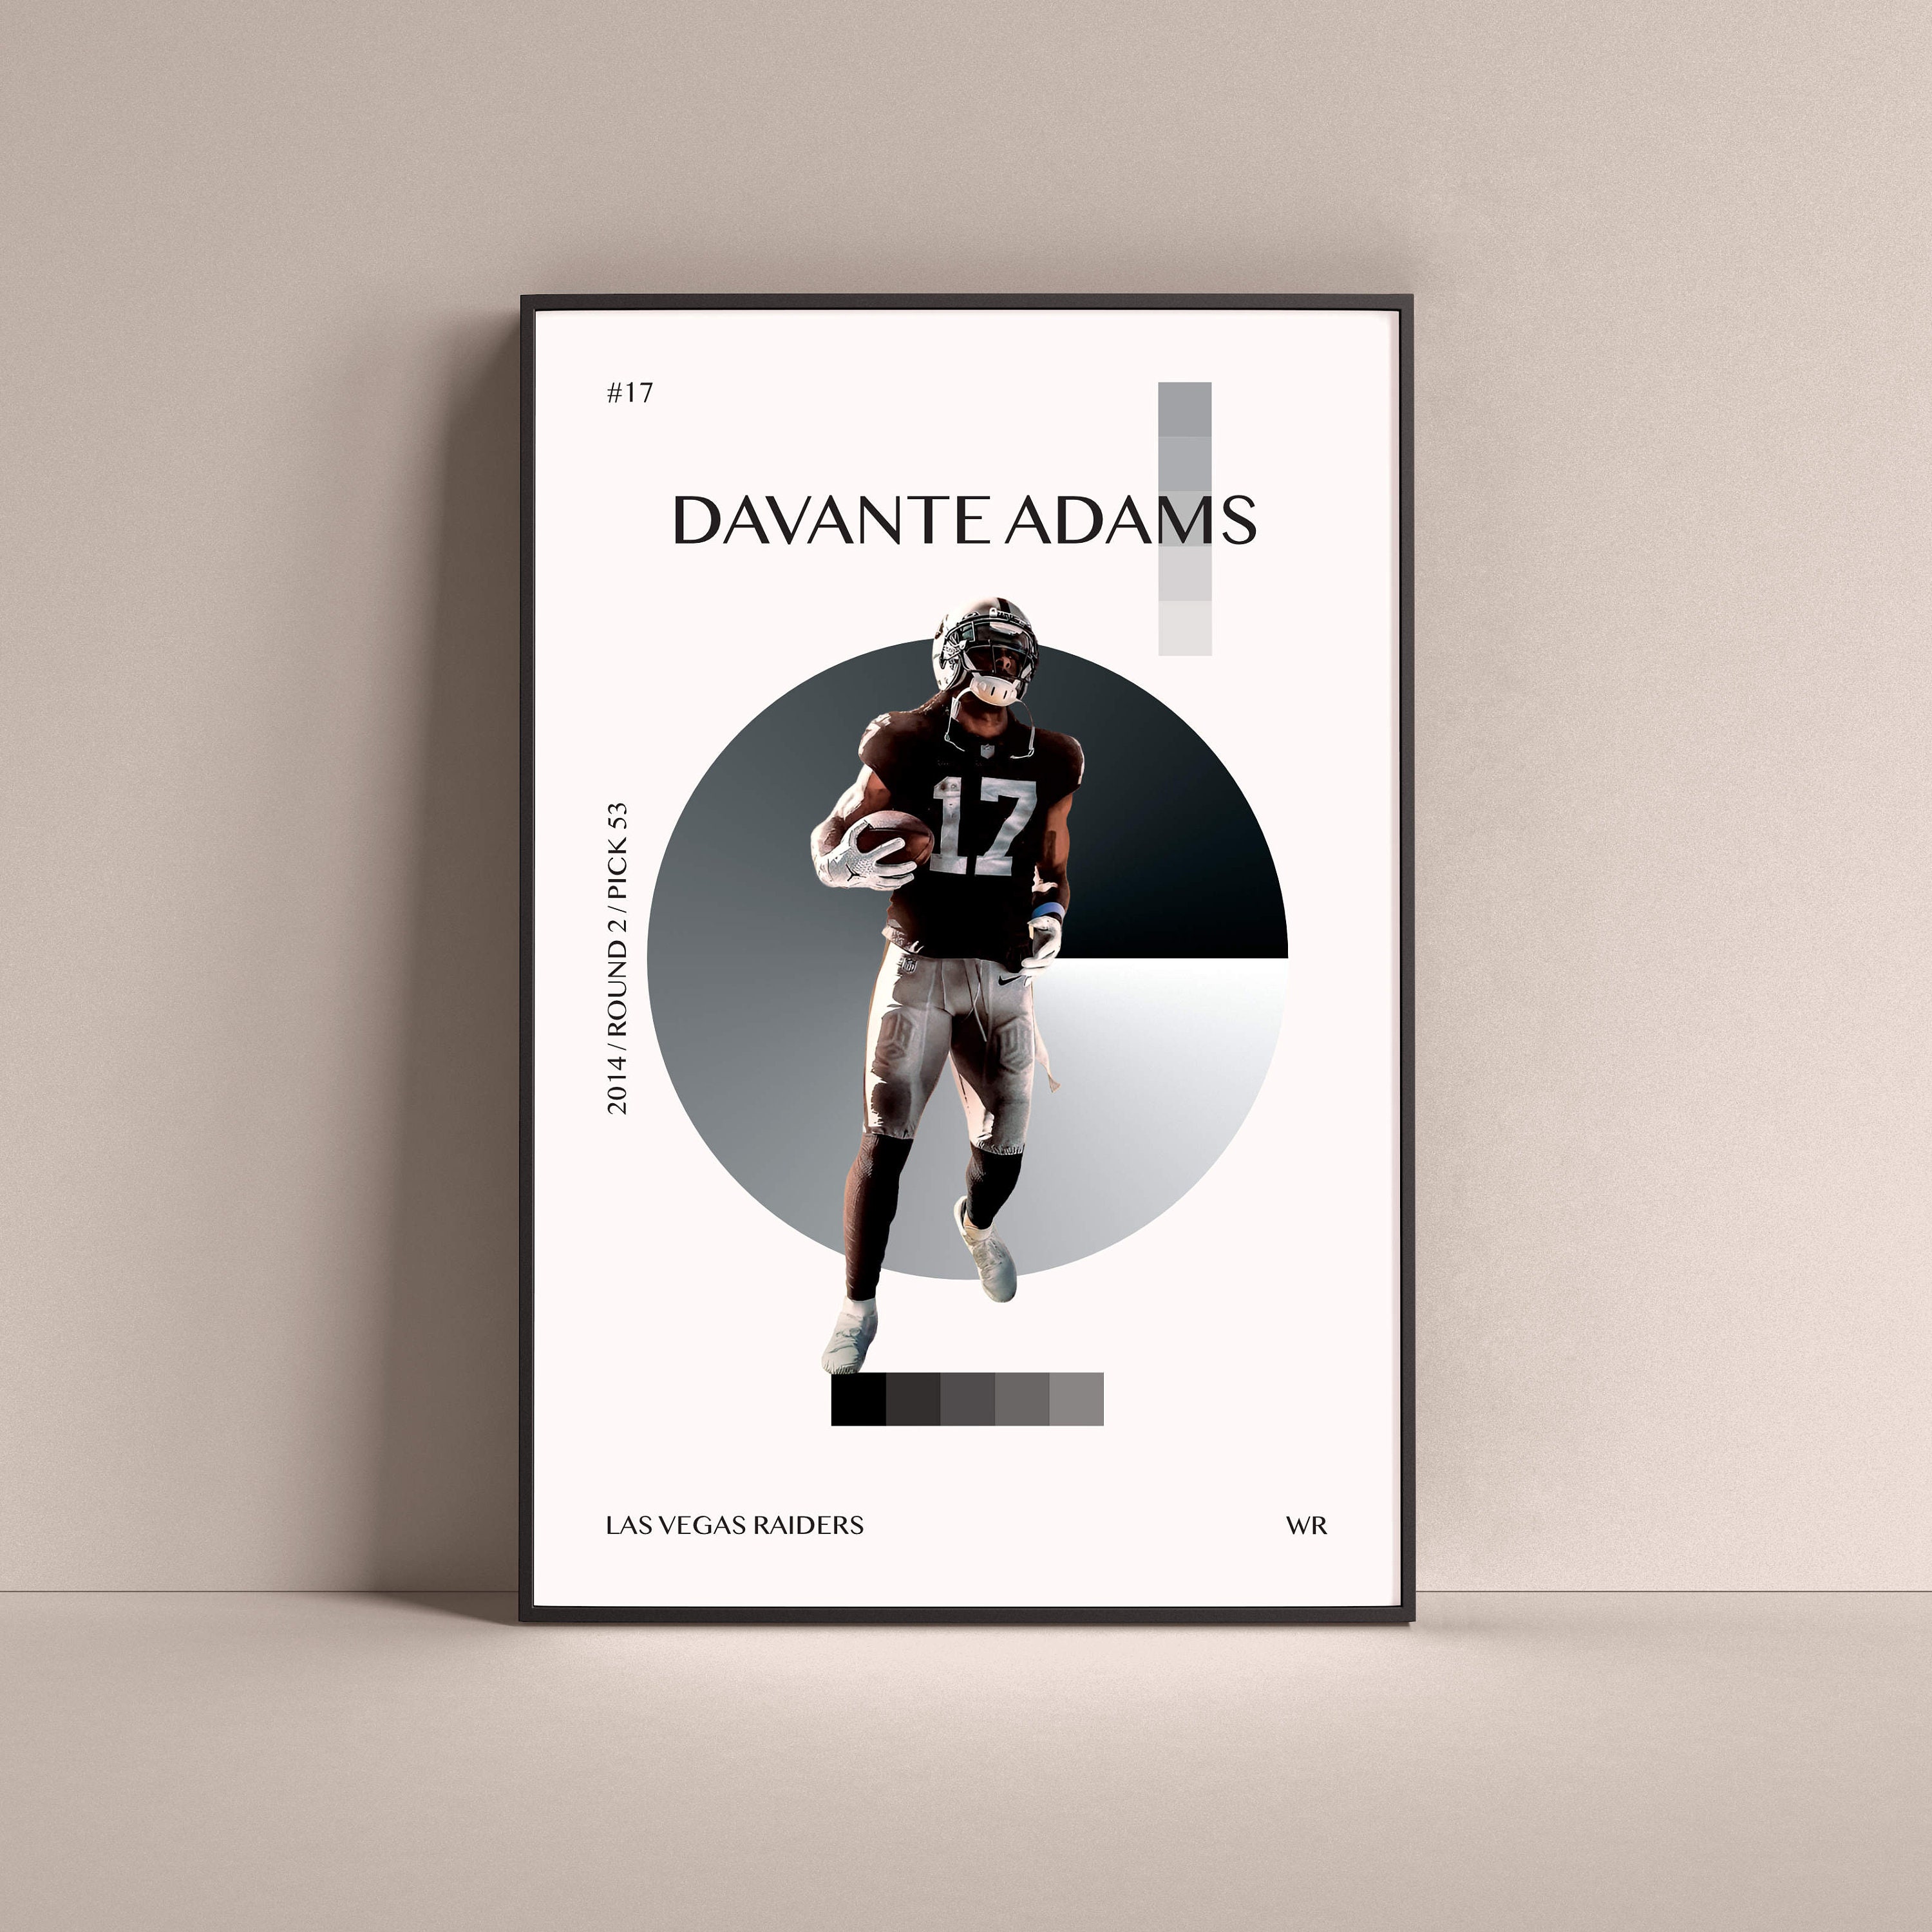 Davante Adams Between The Legs Dunk Celly - Davante Adams Las Vegas Raiders  - Posters and Art Prints